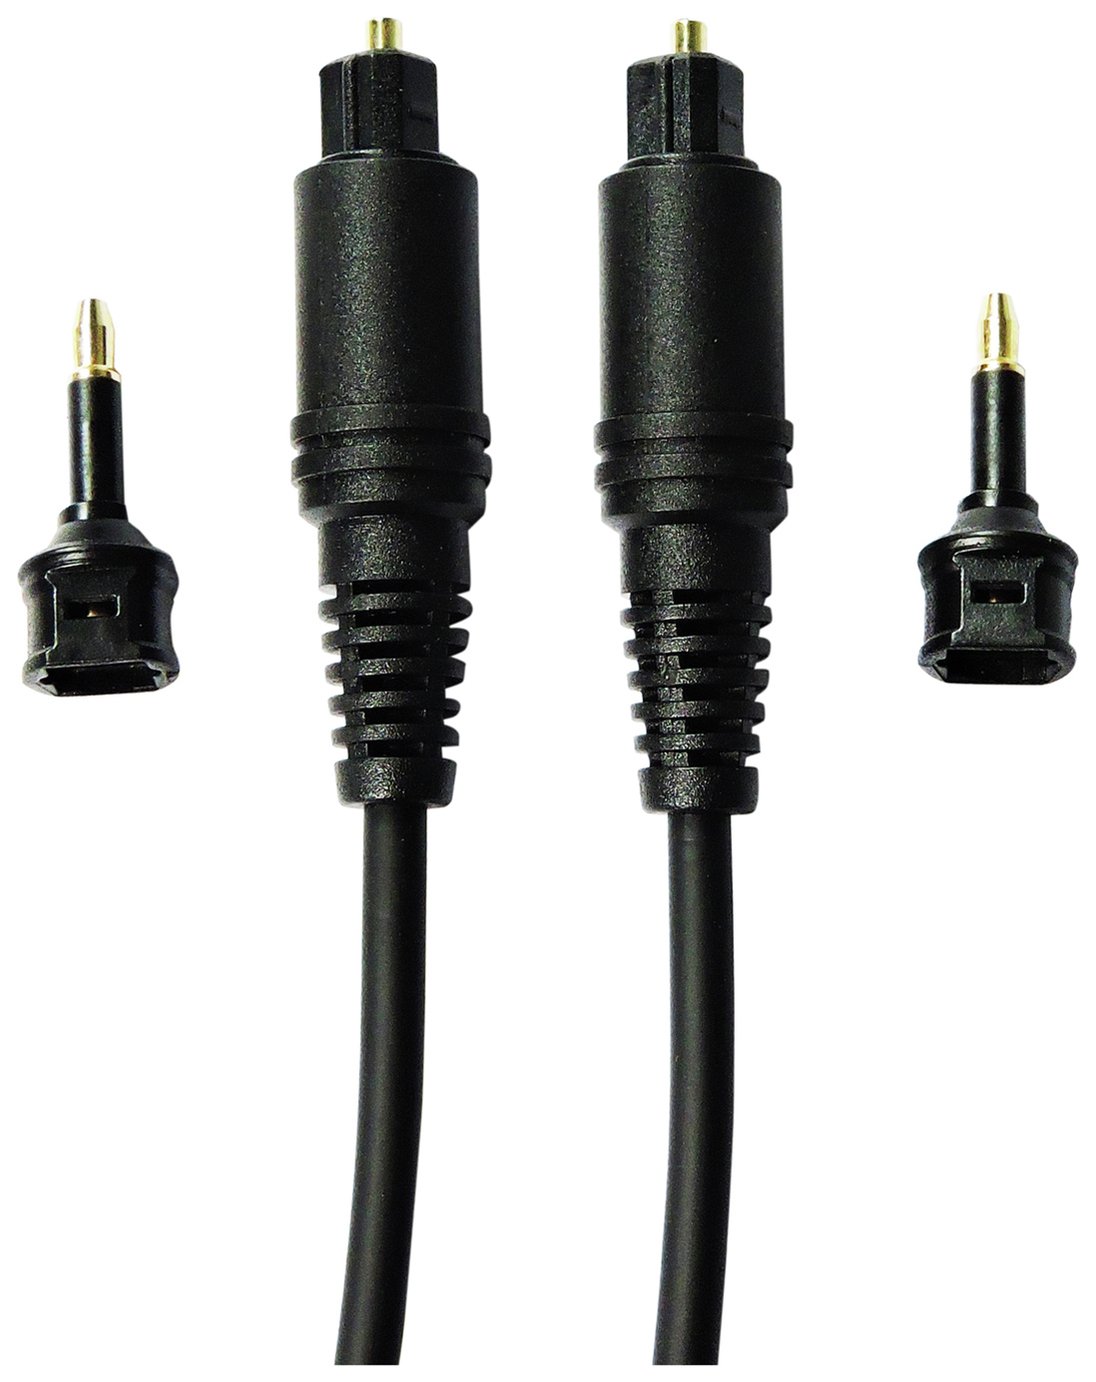 2m Audio Optical Cable - Black